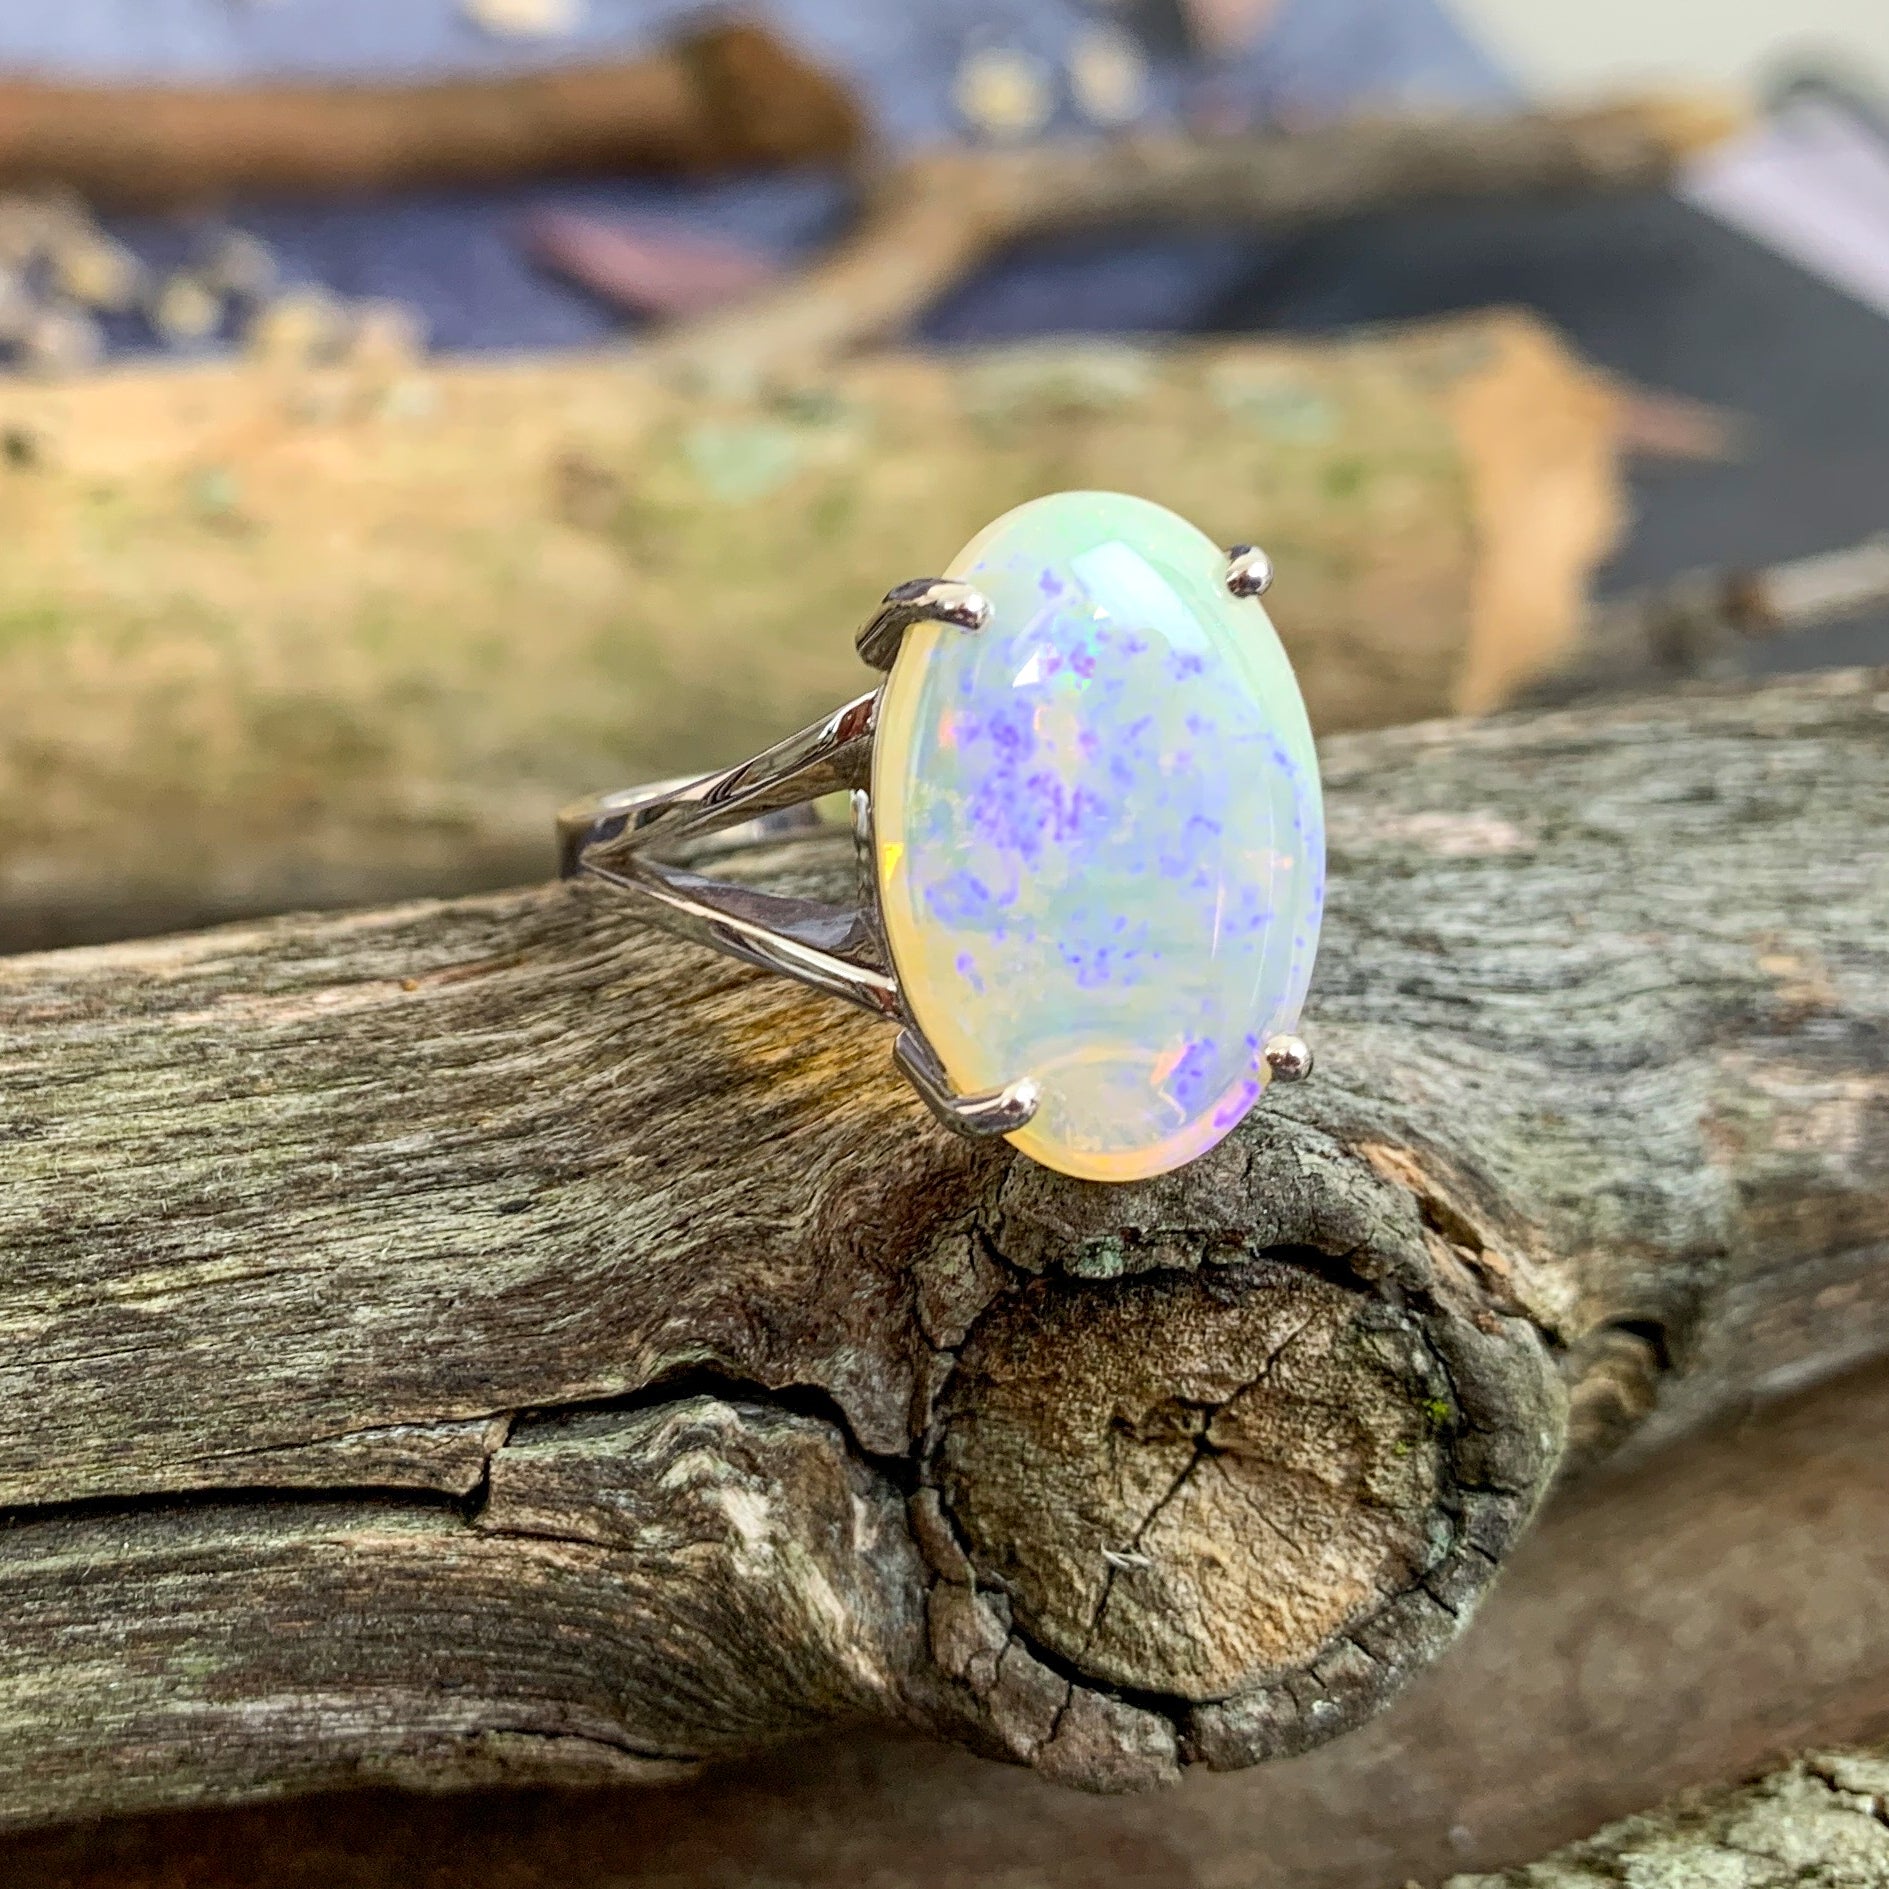 9kt White Gold split shank solitaire ring with 4.8ct Light Opal - Masterpiece Jewellery Opal & Gems Sydney Australia | Online Shop